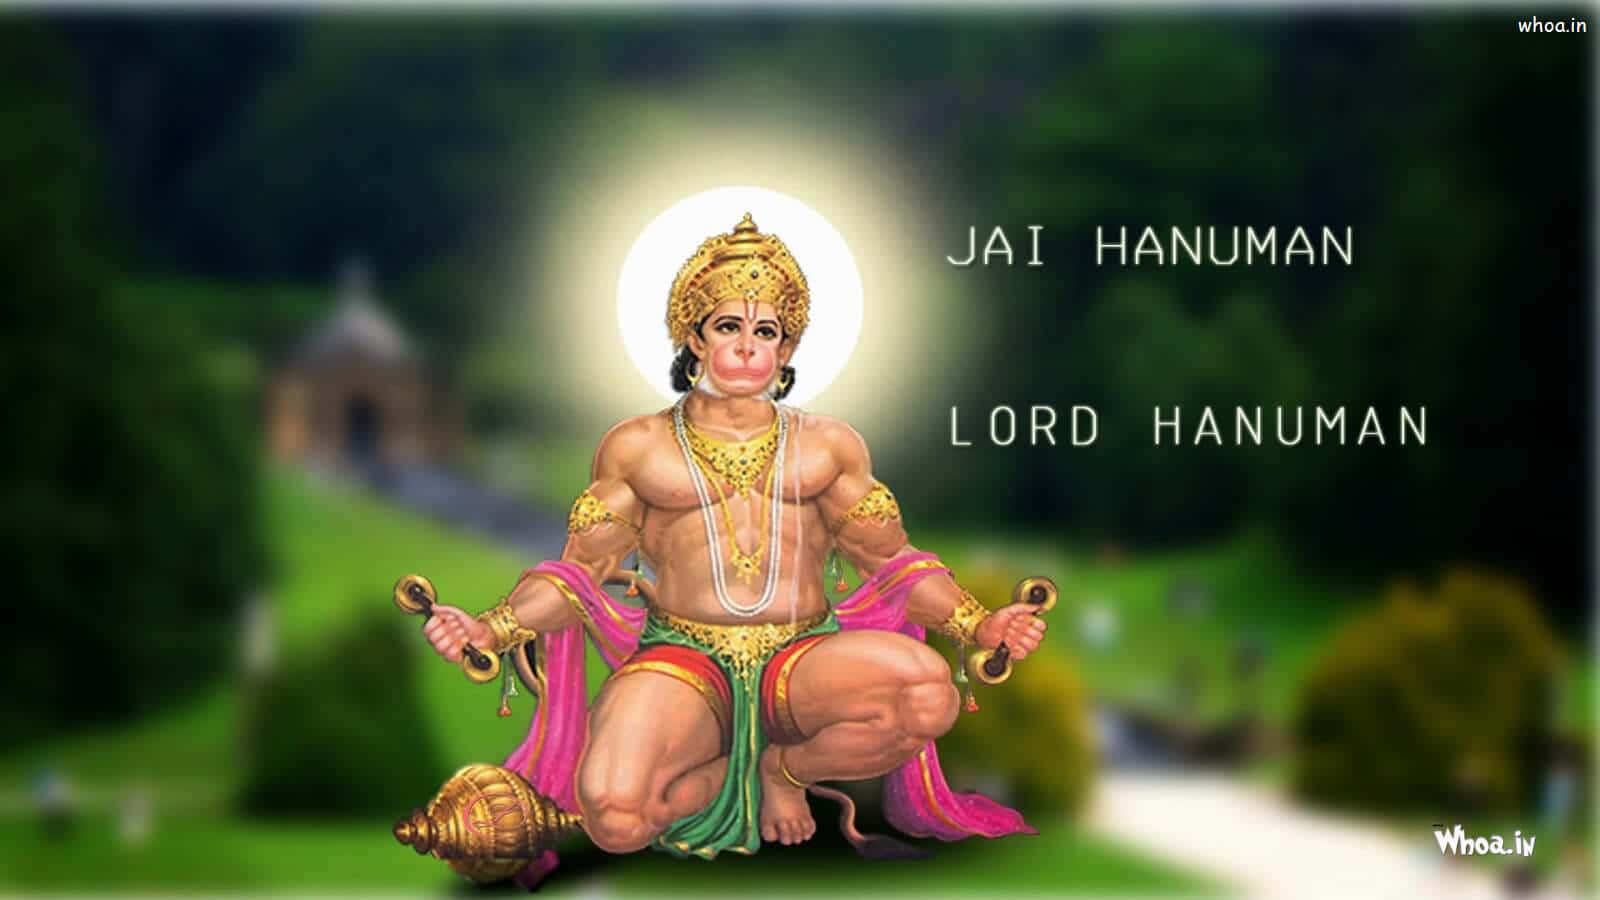 Lord Hanuman looking calm and powerful